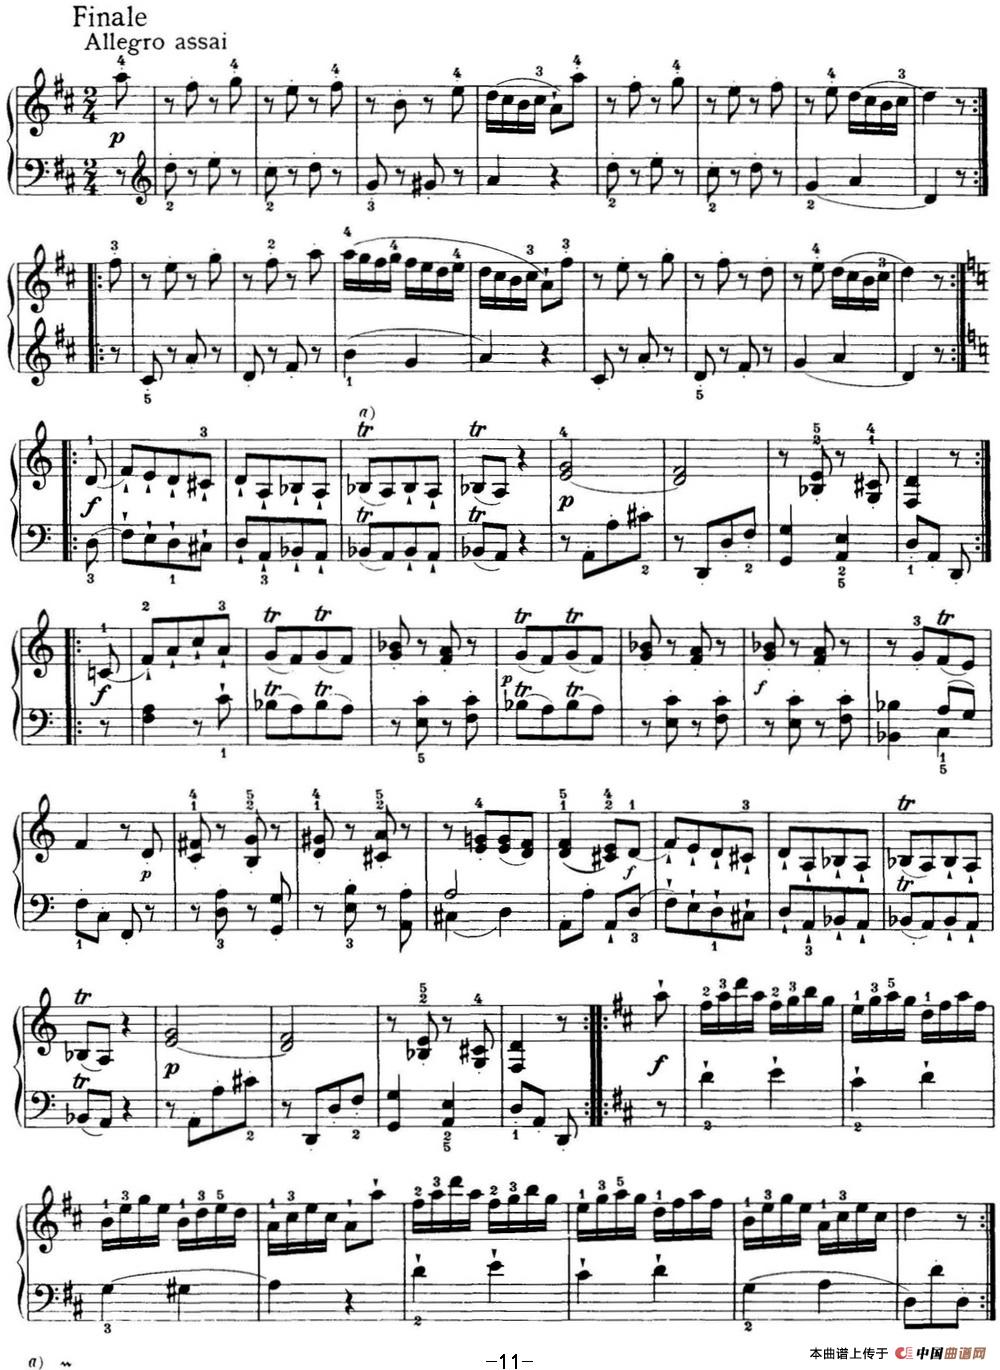 海顿 钢琴奏鸣曲 Hob XVI 19 Divertimento D major